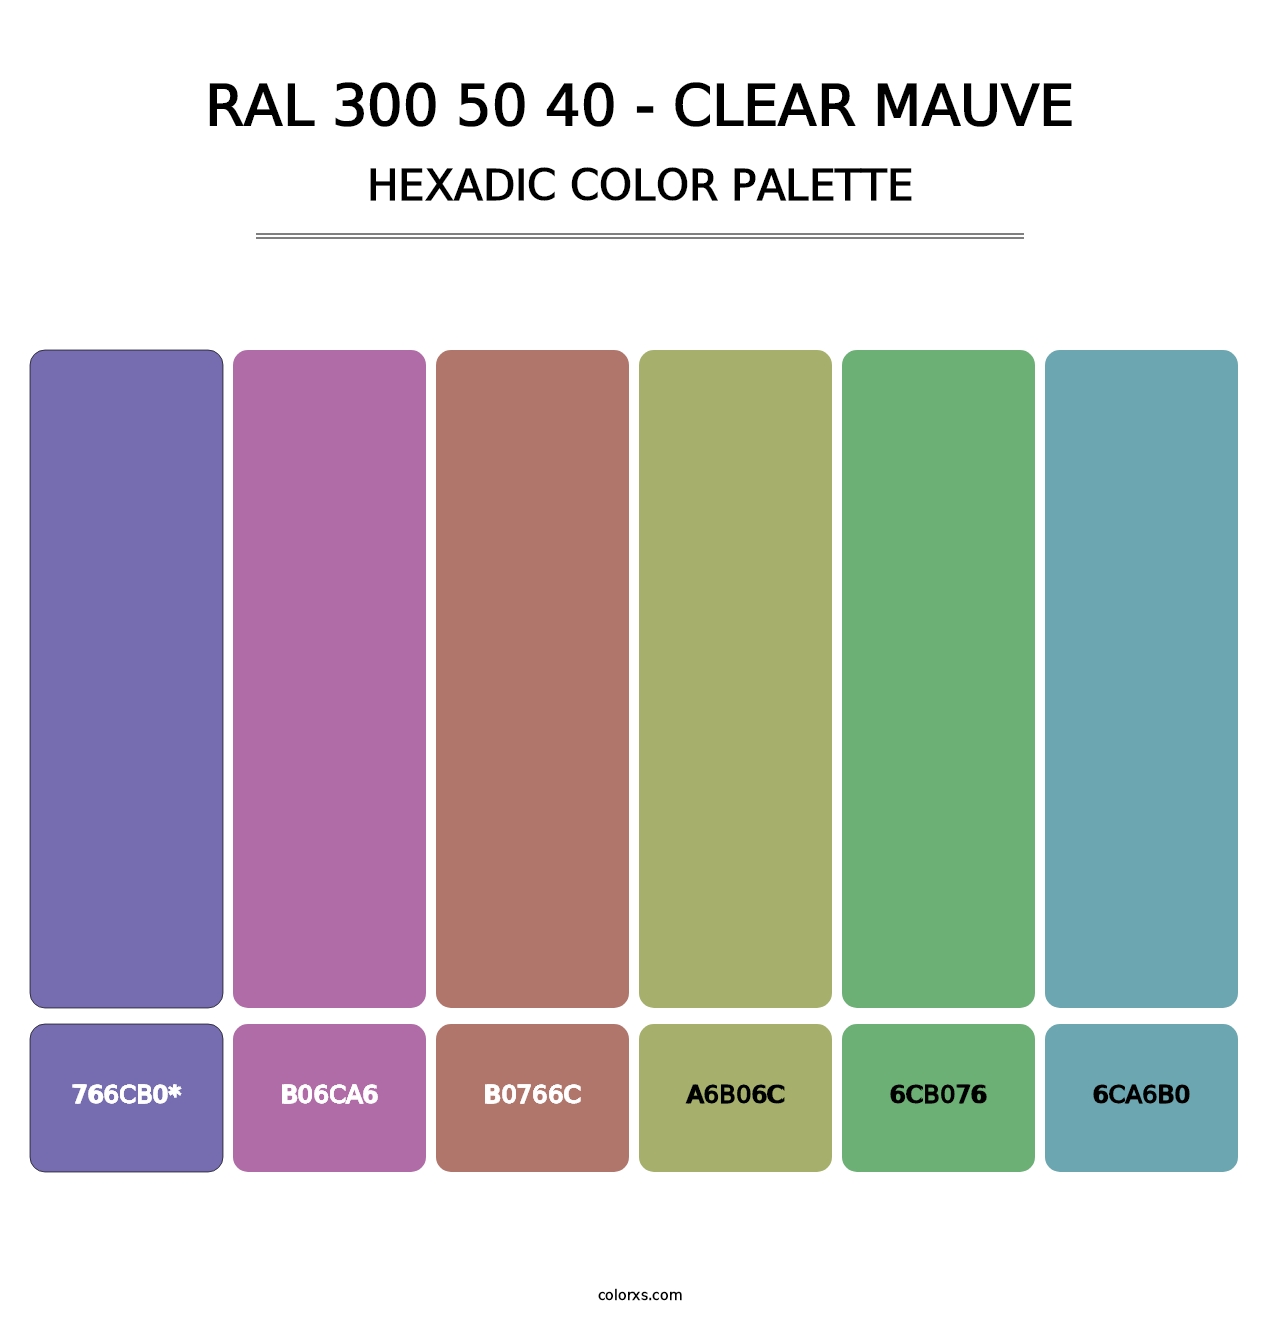 RAL 300 50 40 - Clear Mauve - Hexadic Color Palette